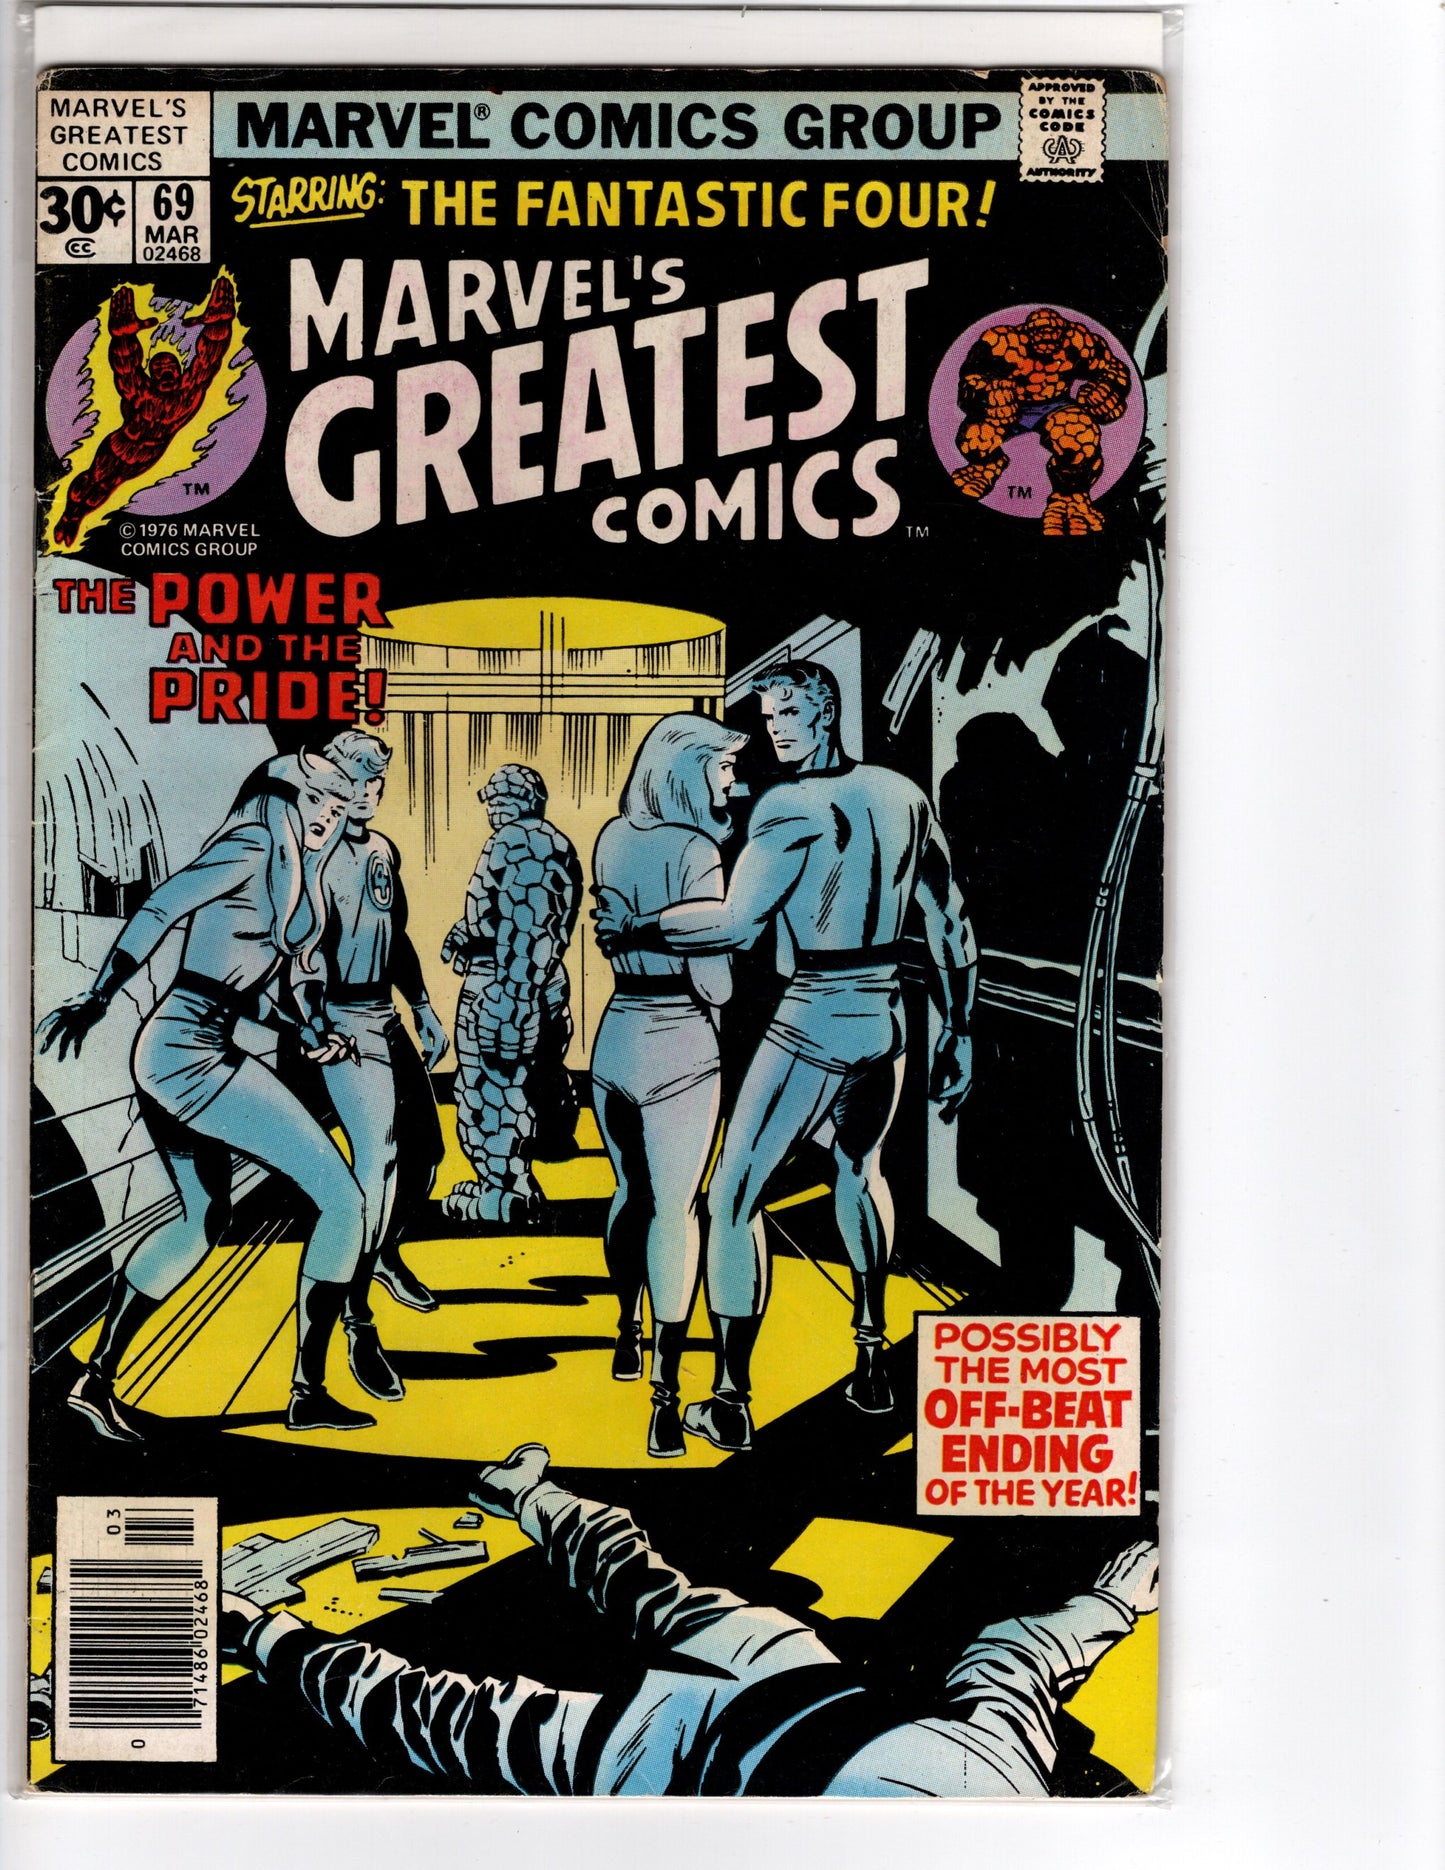 Marvel's Greatest Comics#69